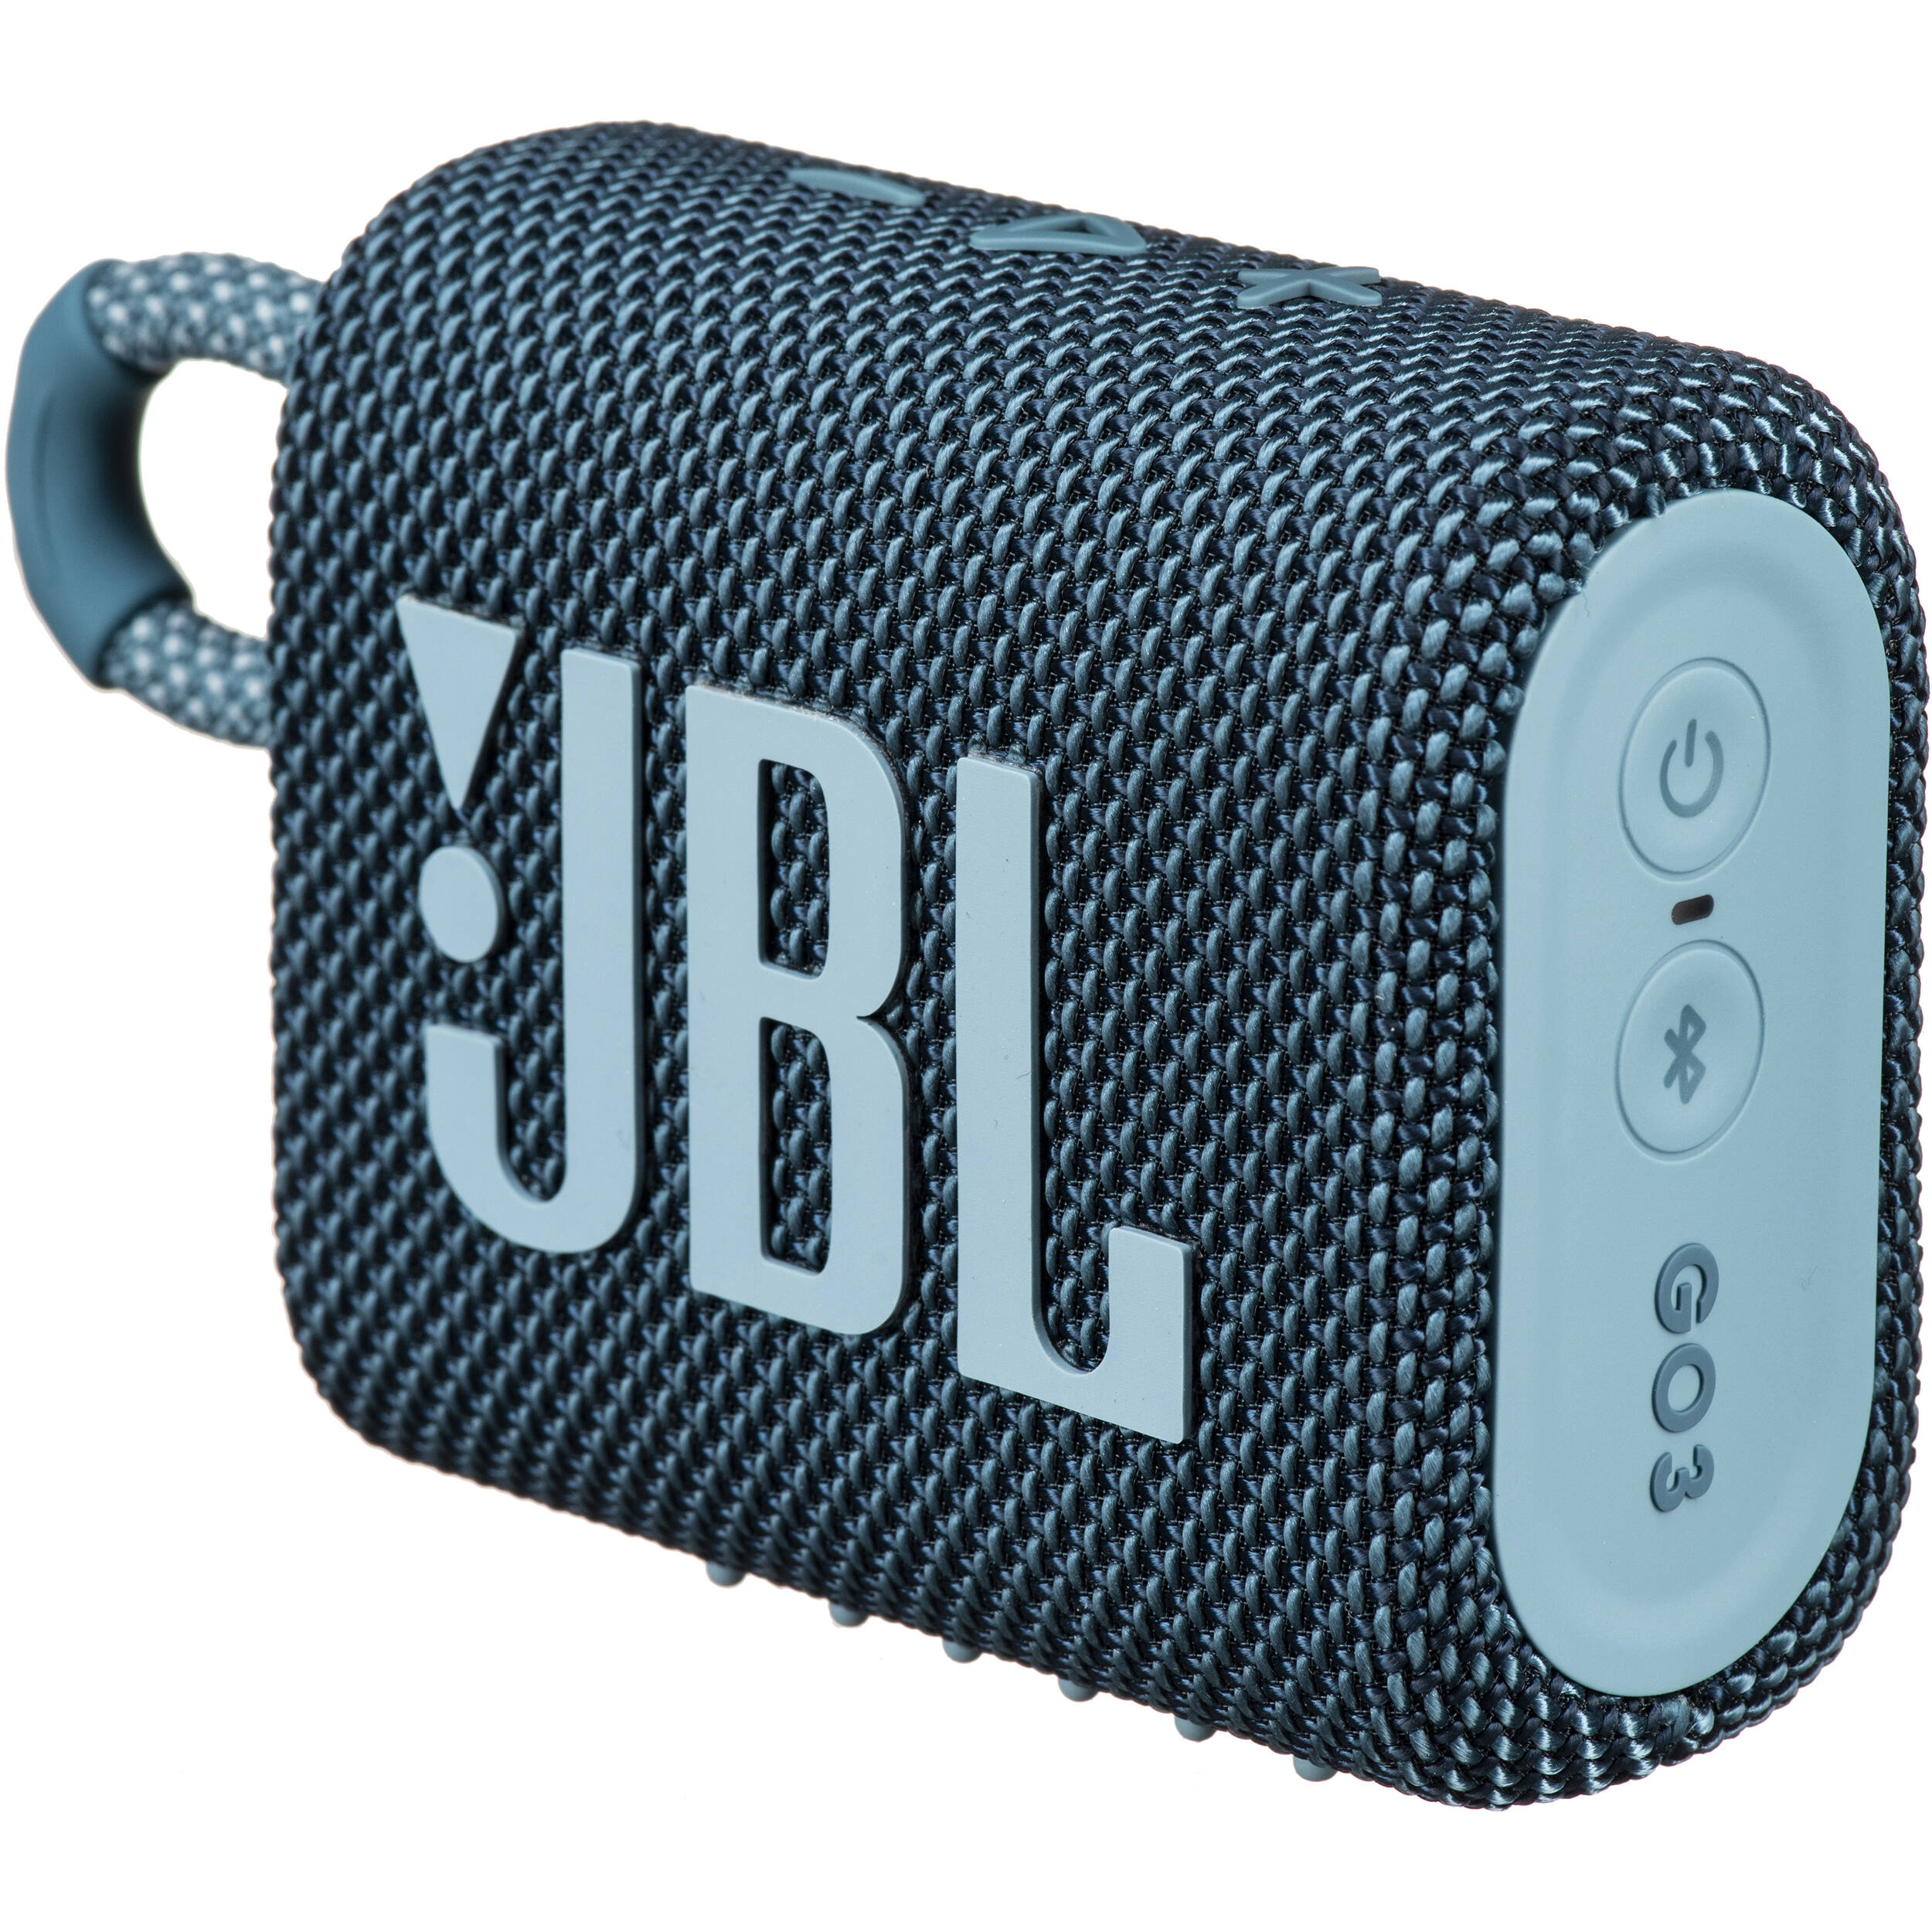 JBL Go 3 防水蓝牙无线扬声器 - 蓝色 $49.99